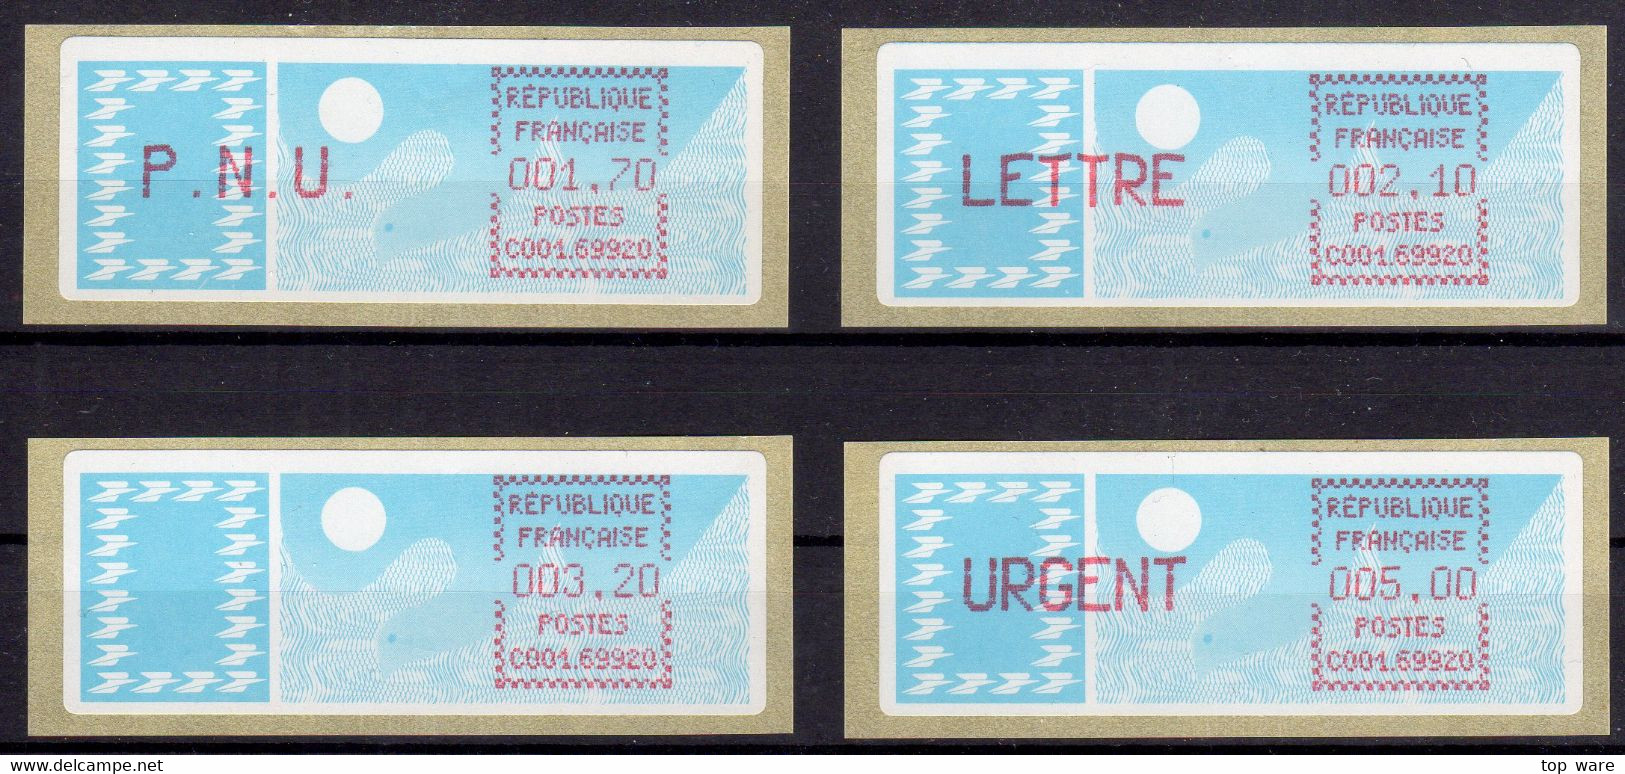 France ATM Stamps C001.69920 Michel 6.6 Zb Series ZS1 Neuf / MNH / Crouzet LSA Distributeurs Automatenmarken Frama Lisa - 1985 Carta « Carrier »